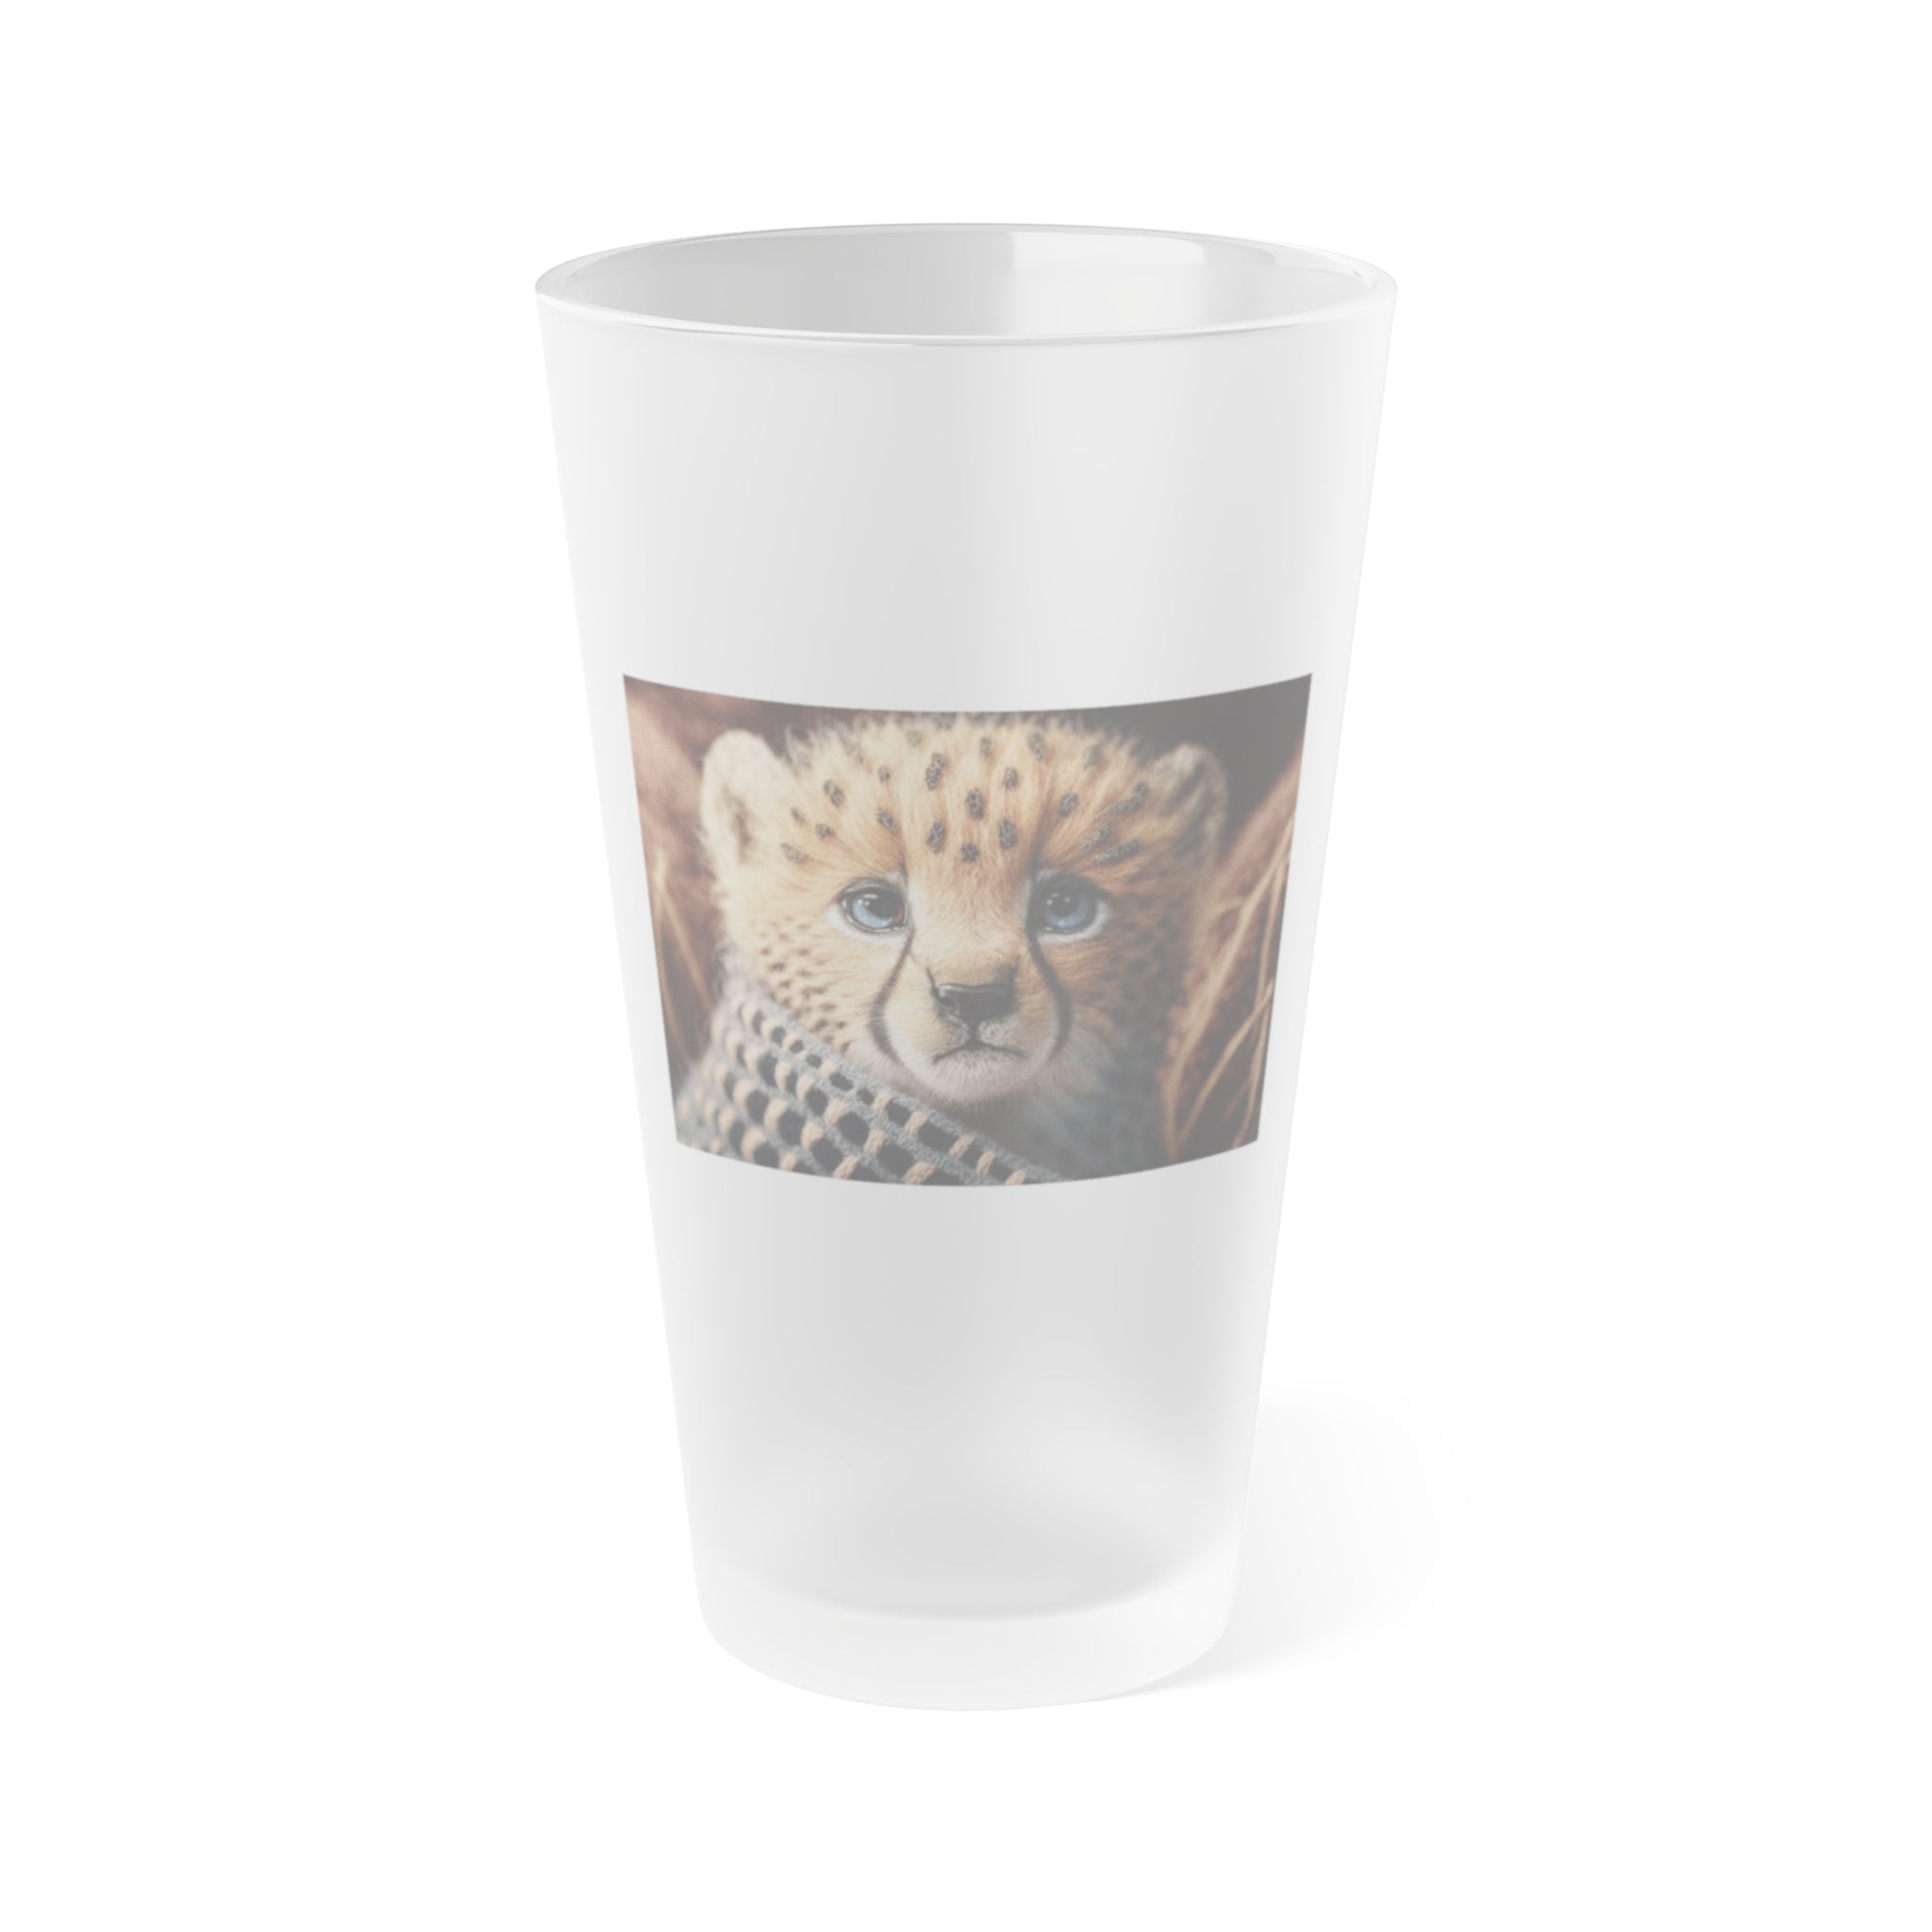 Frosted Pint Glass, 16oz - Animal Knit Arts, Cheetah cub